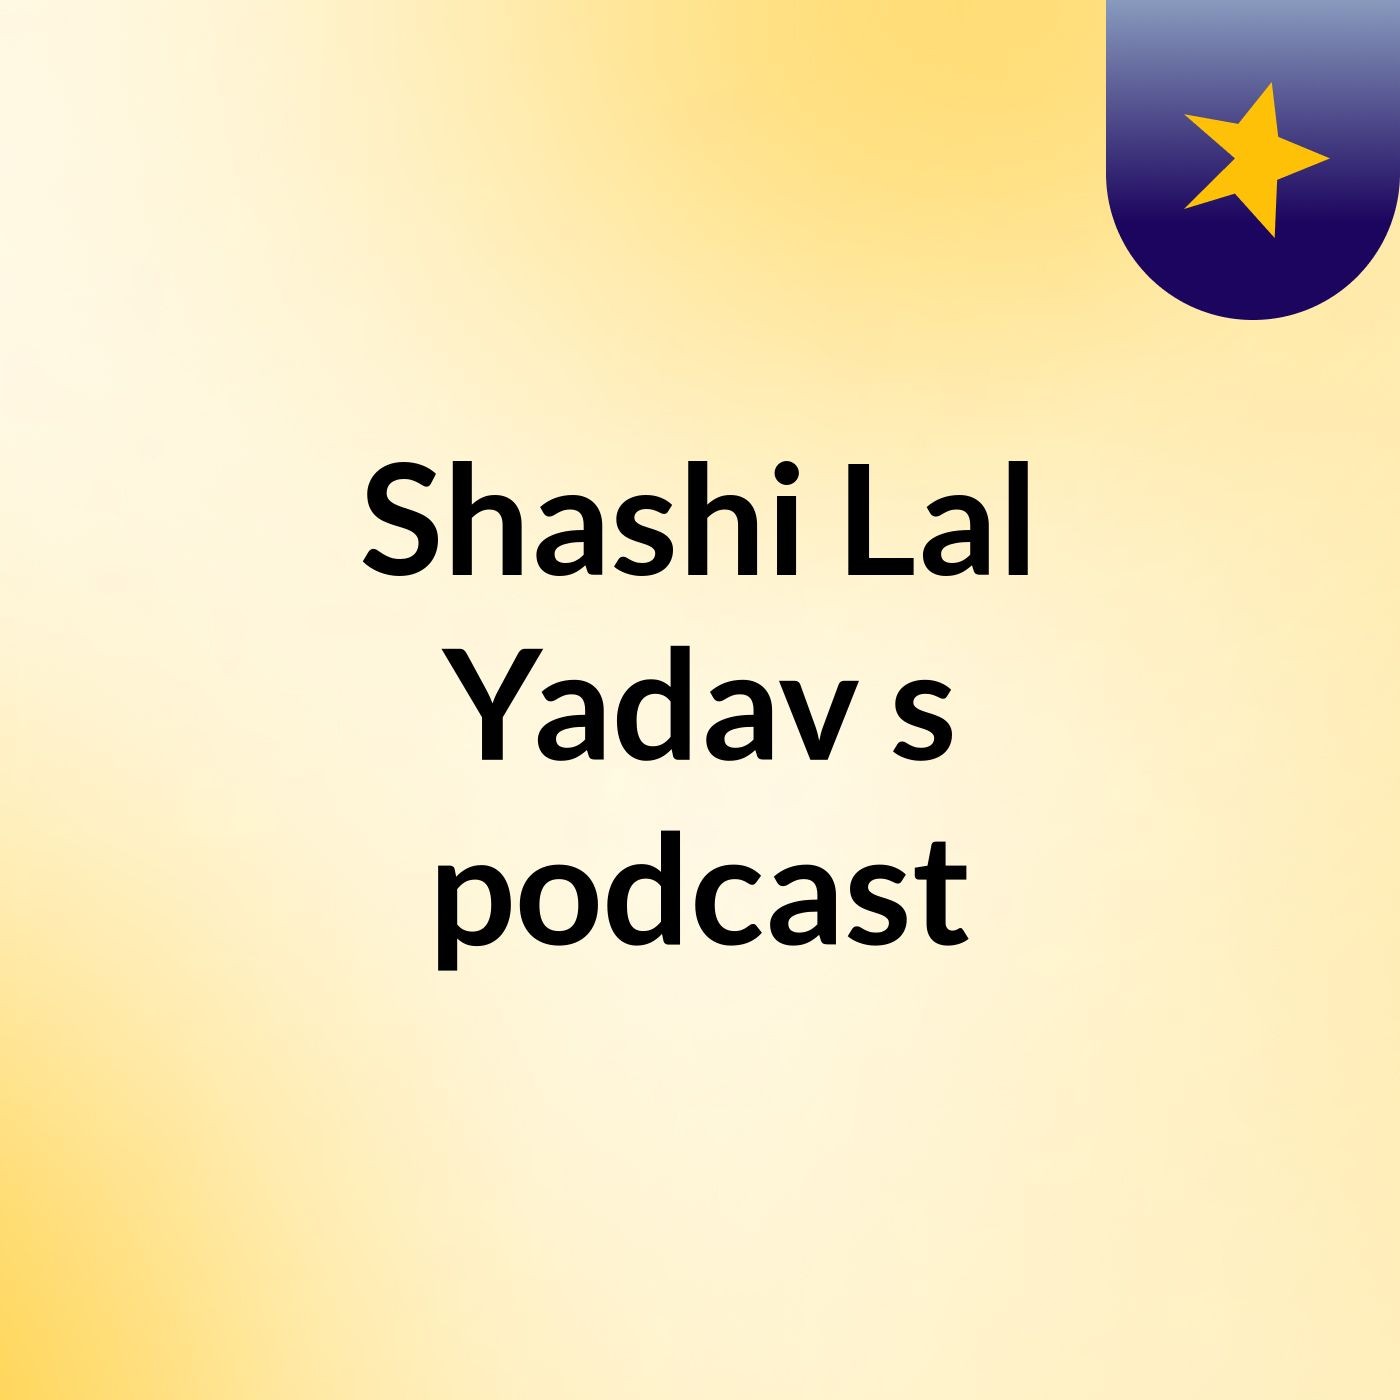 Shashi Lal Yadav's podcast